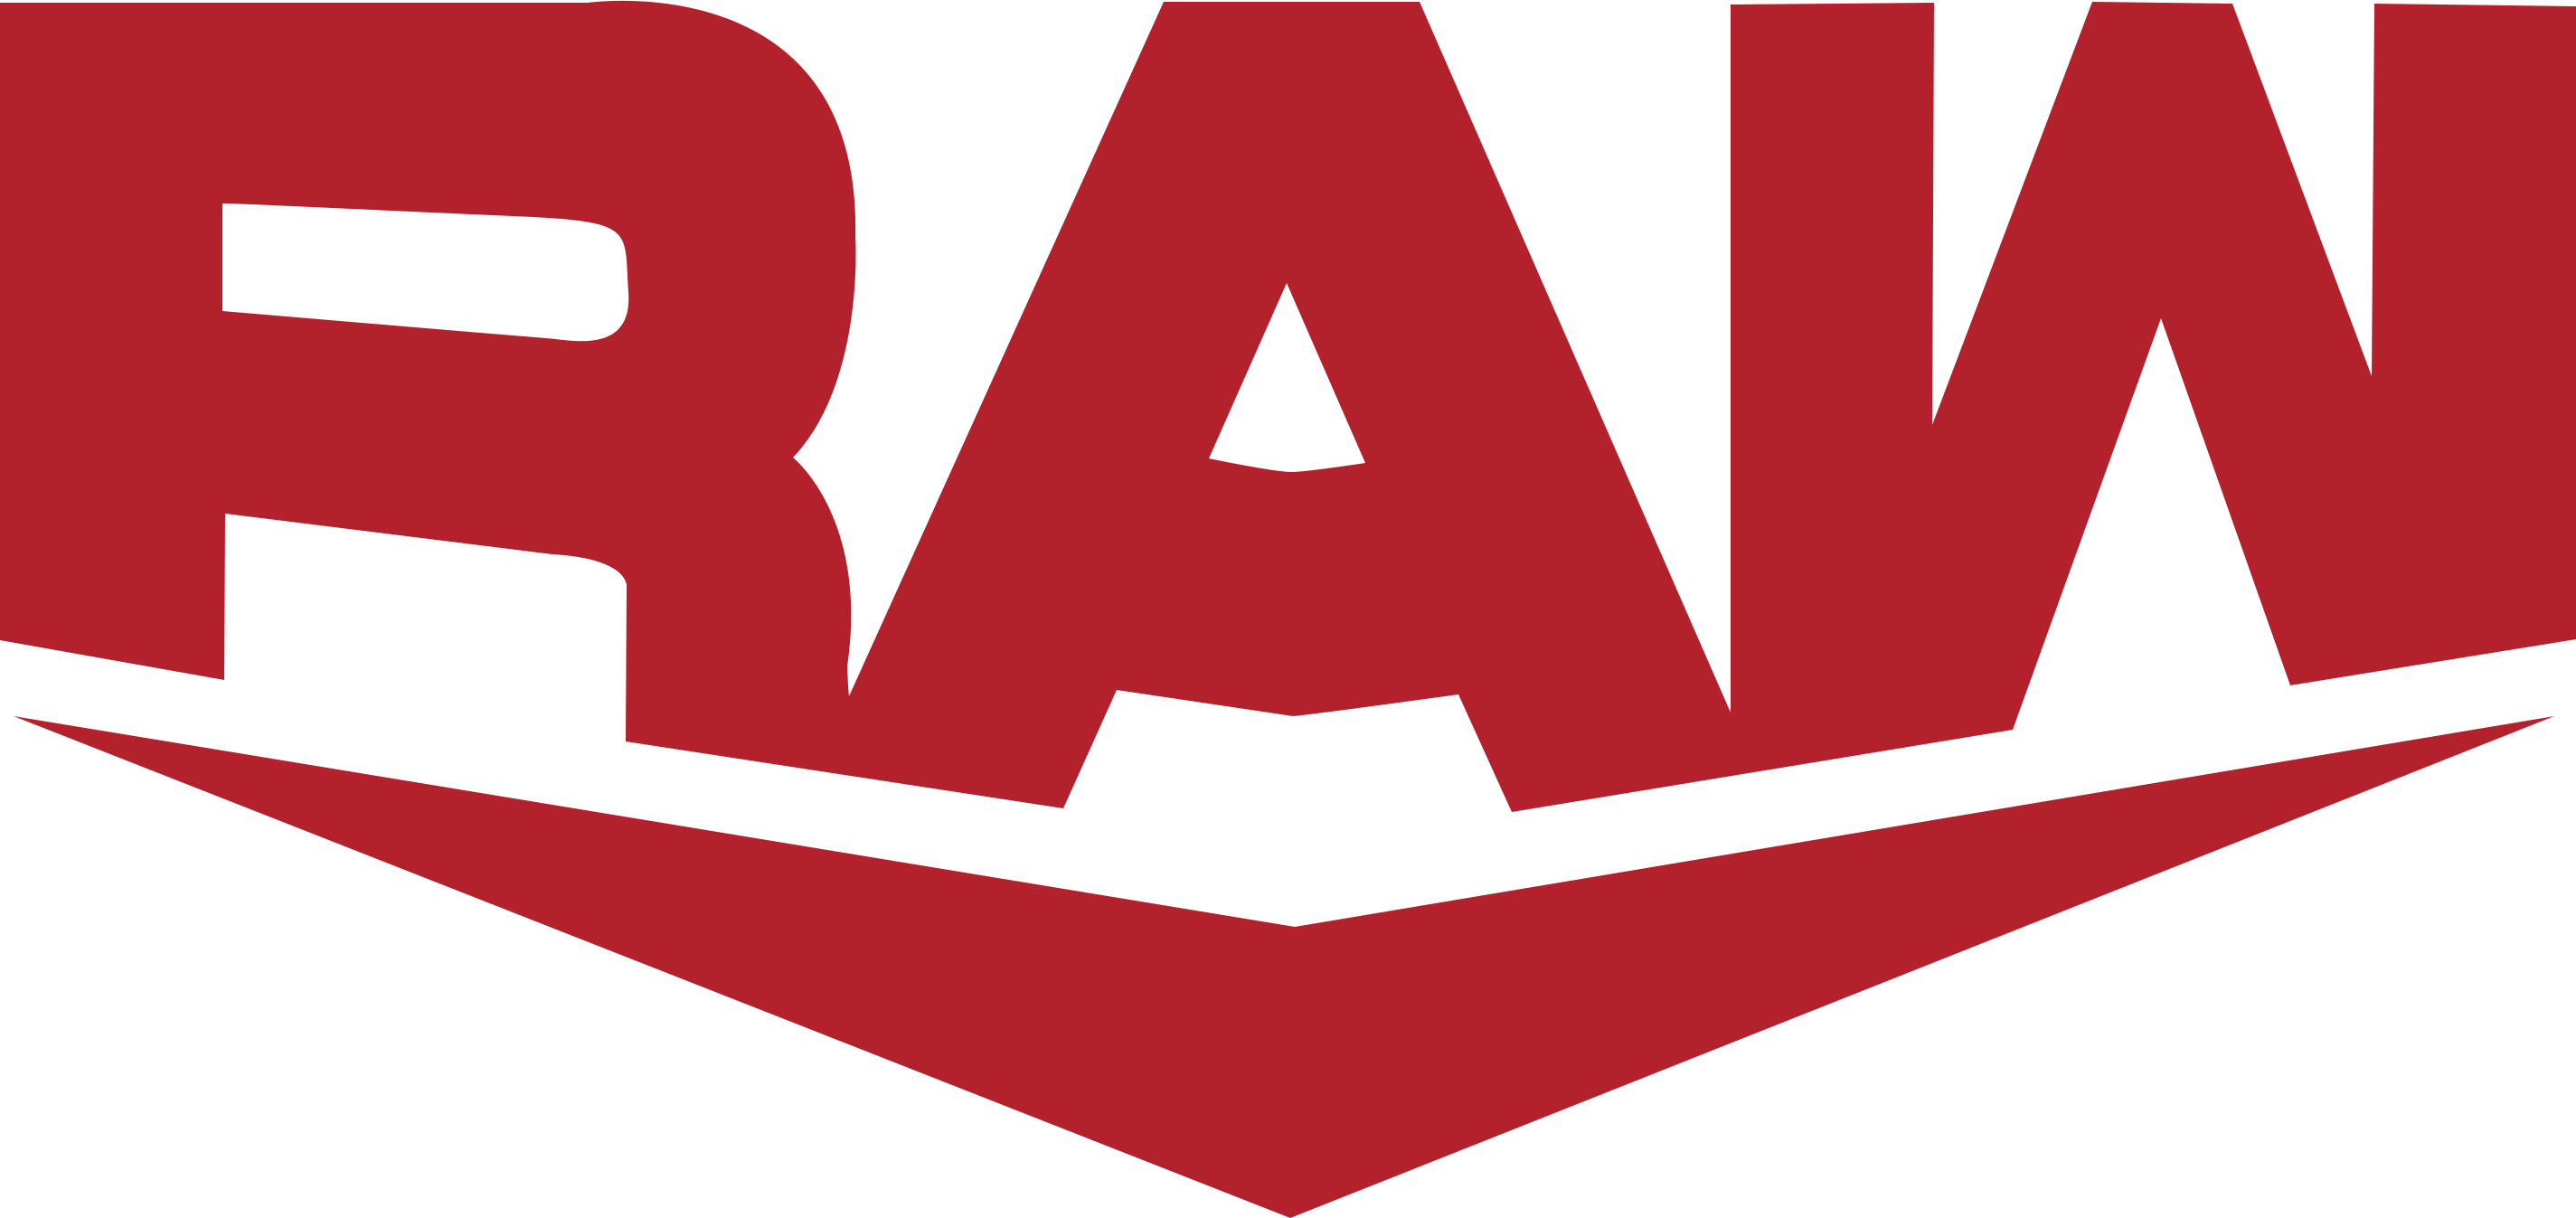 Wwe Raw New Logo 19 By Lastbreathgfx On Deviantart